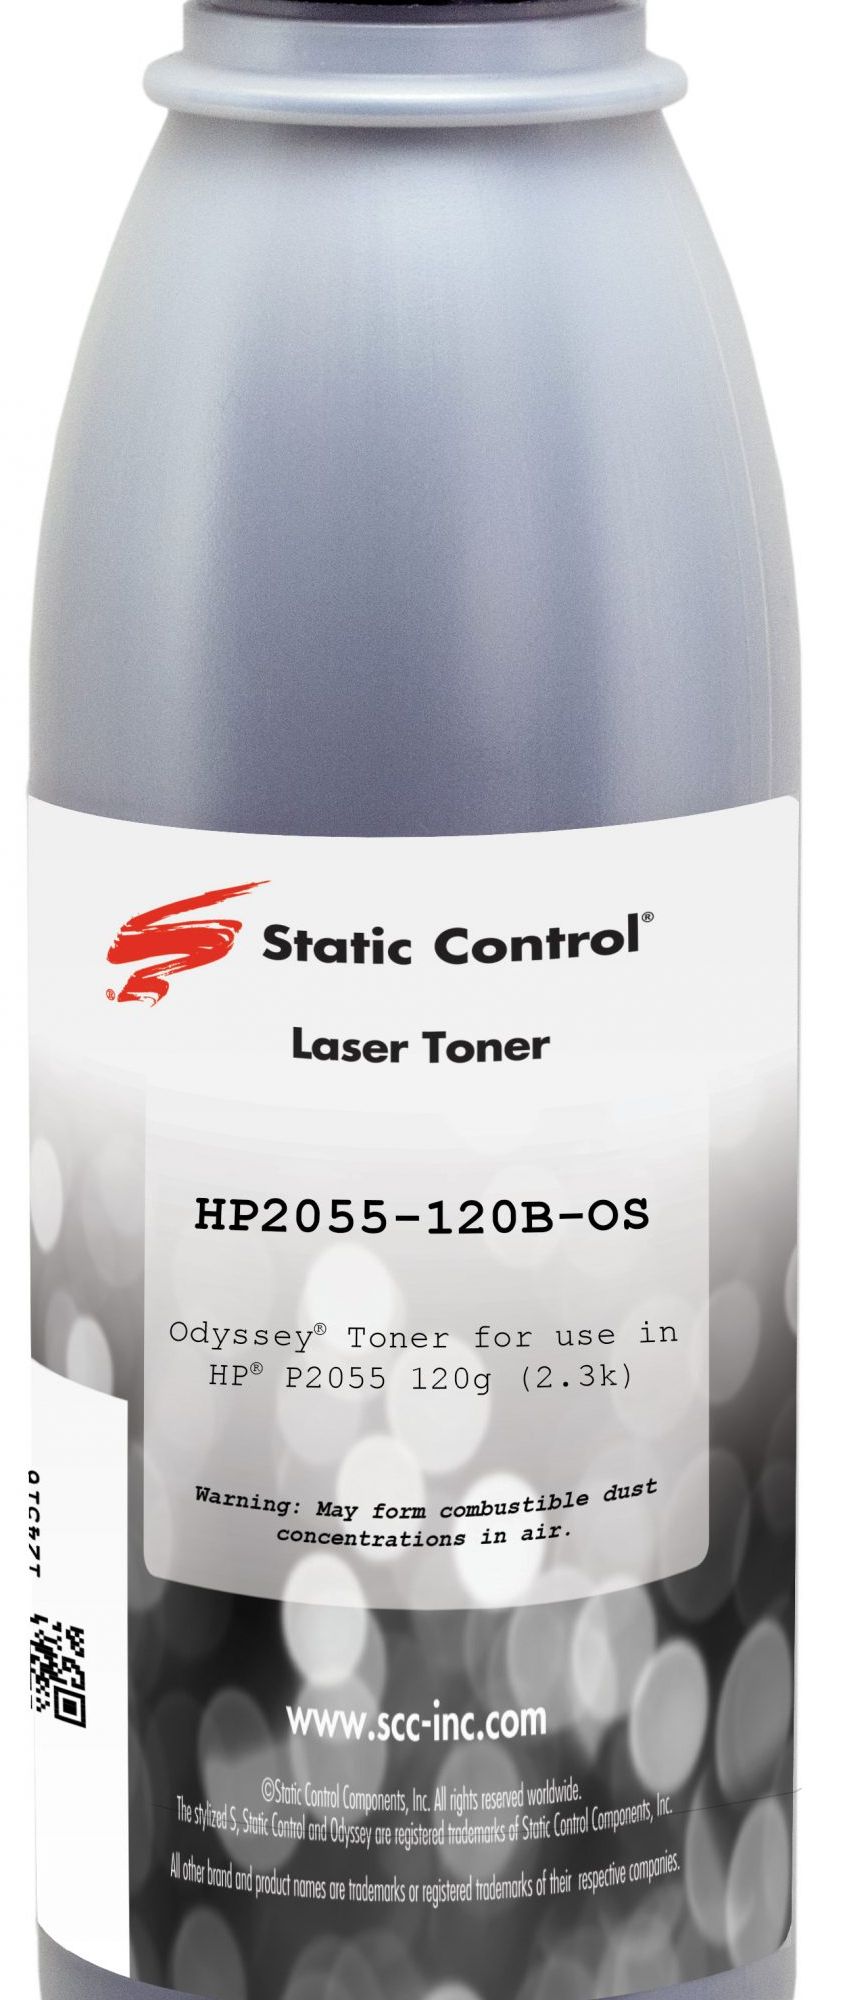 тонер hp lj p2035 2055 фл 120г odyssey sc hp2055 120b os Тонер Static Control HP2055-120B-OS для HP (фл. 120г)